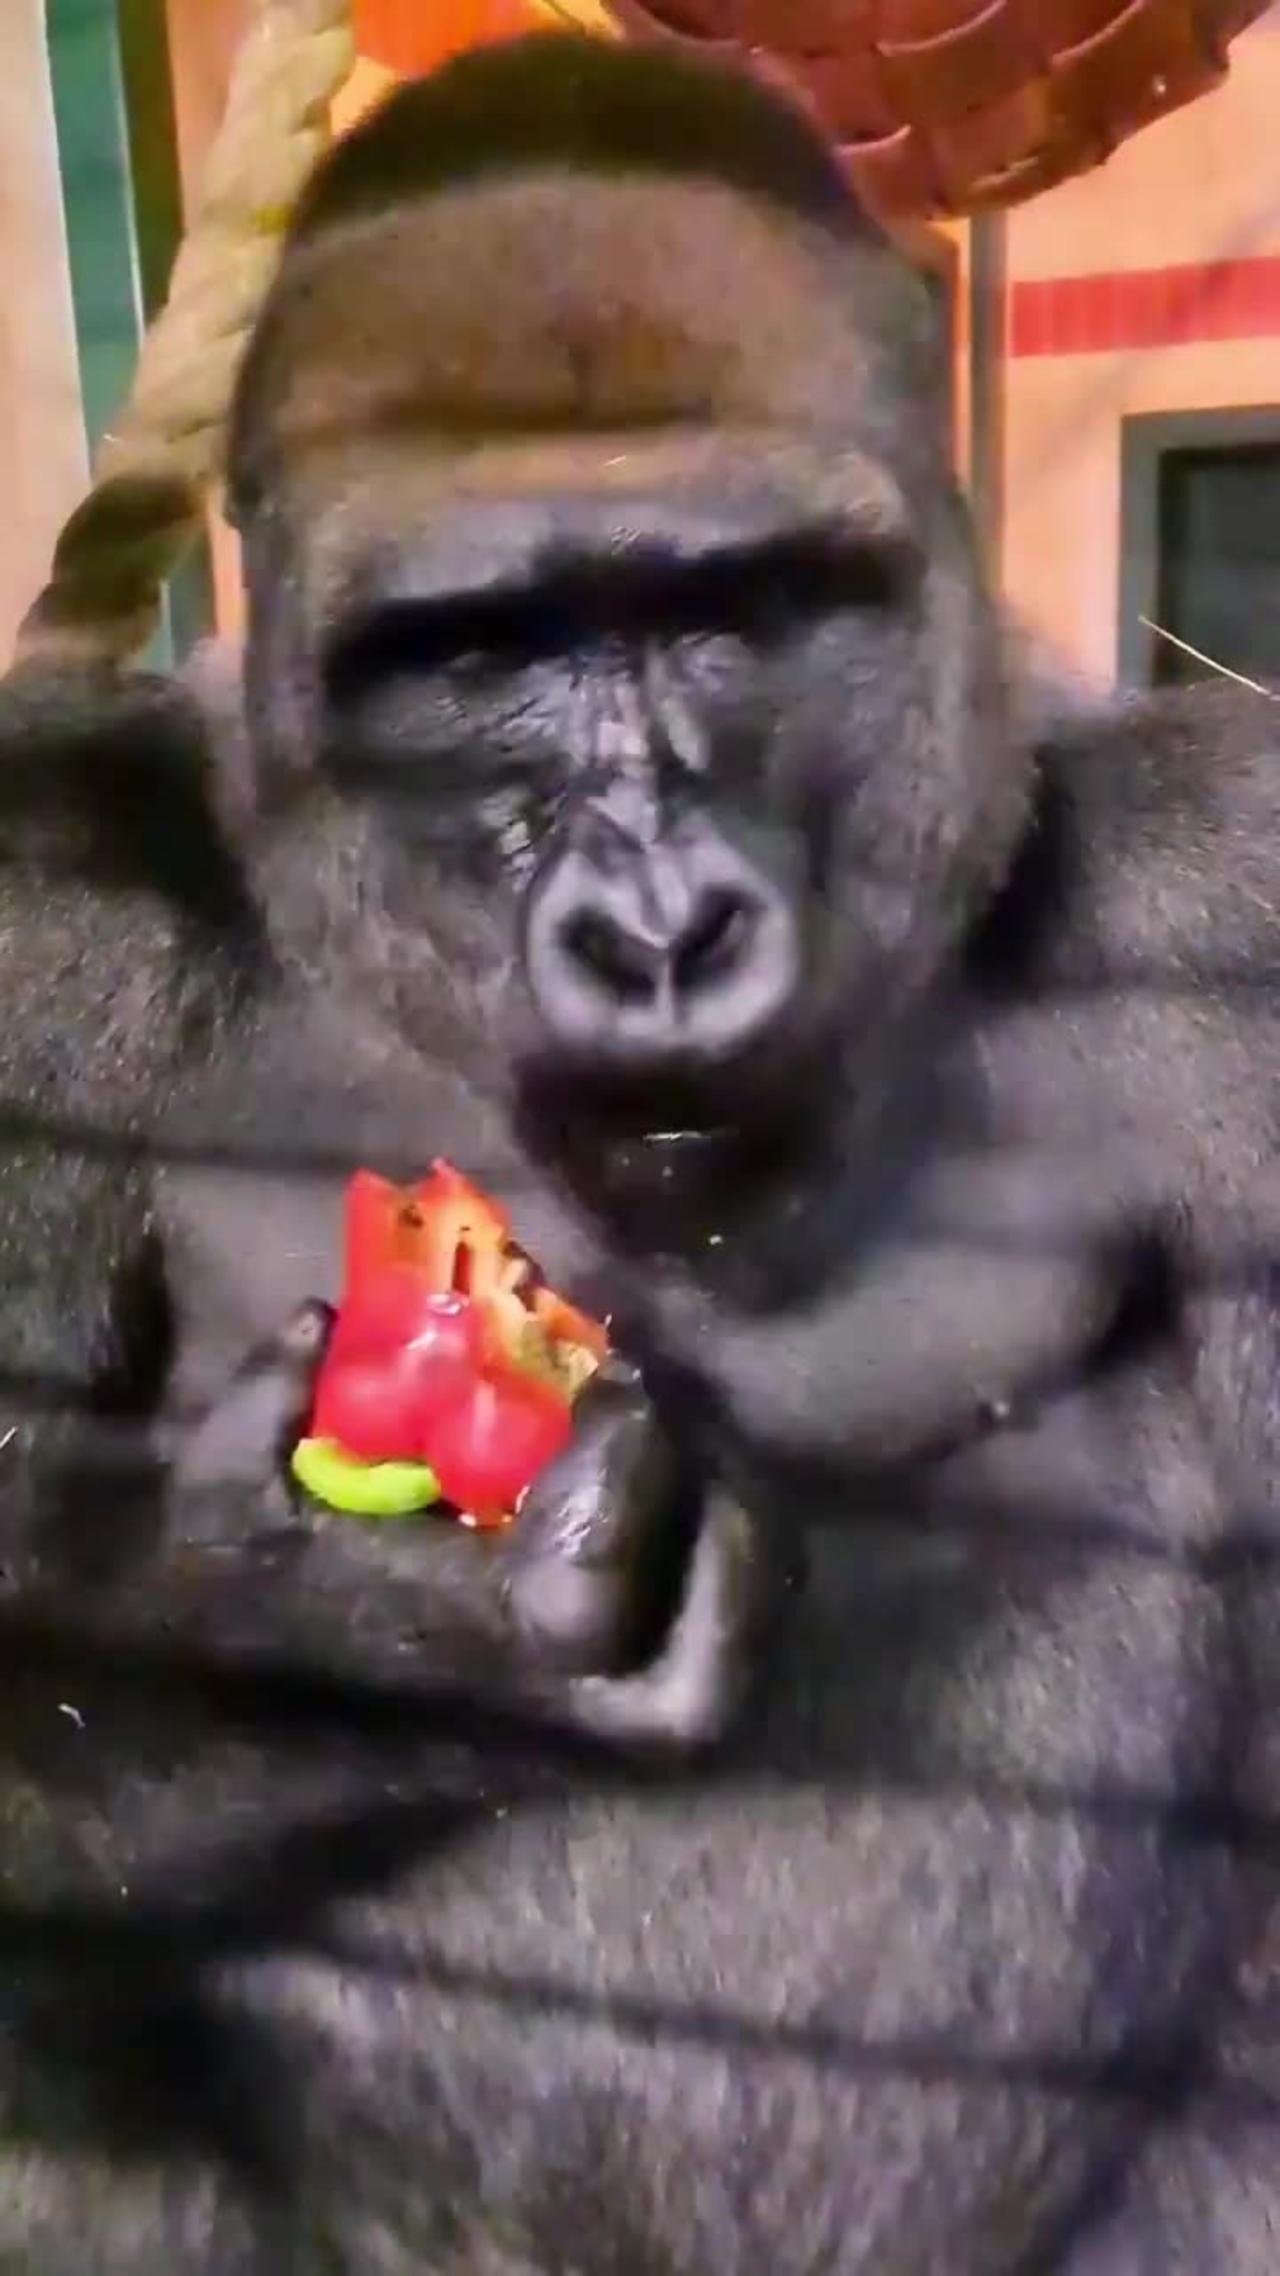 Listen to that crunch! #gorilla #asmr #eating #satisfying